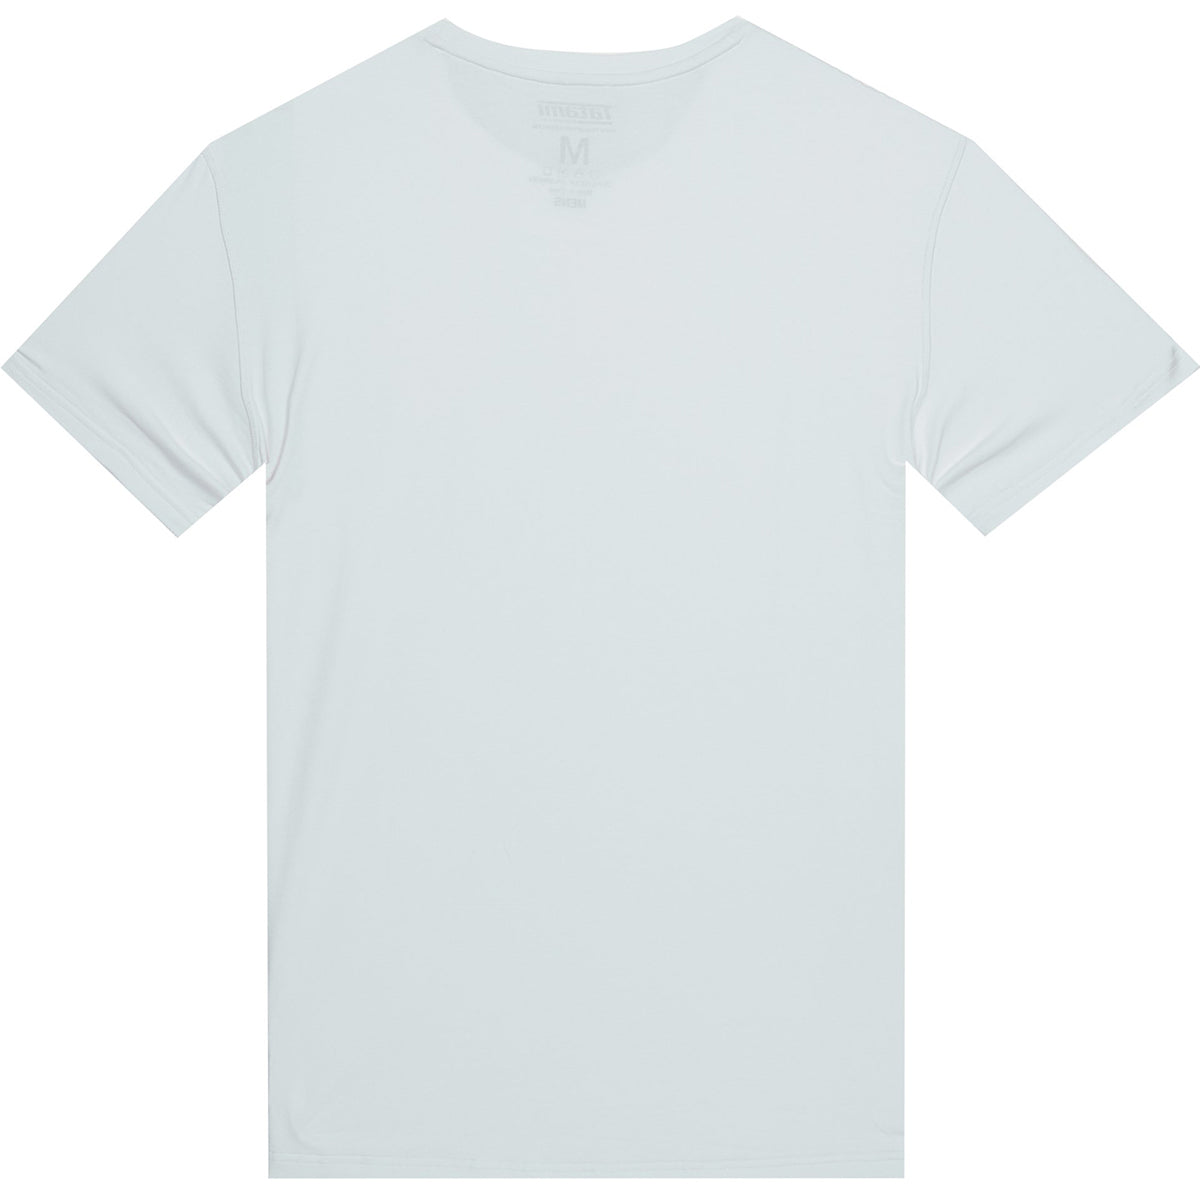 Tatami Fightwear Logo T-Shirt - White/Black Tatami Fightwear